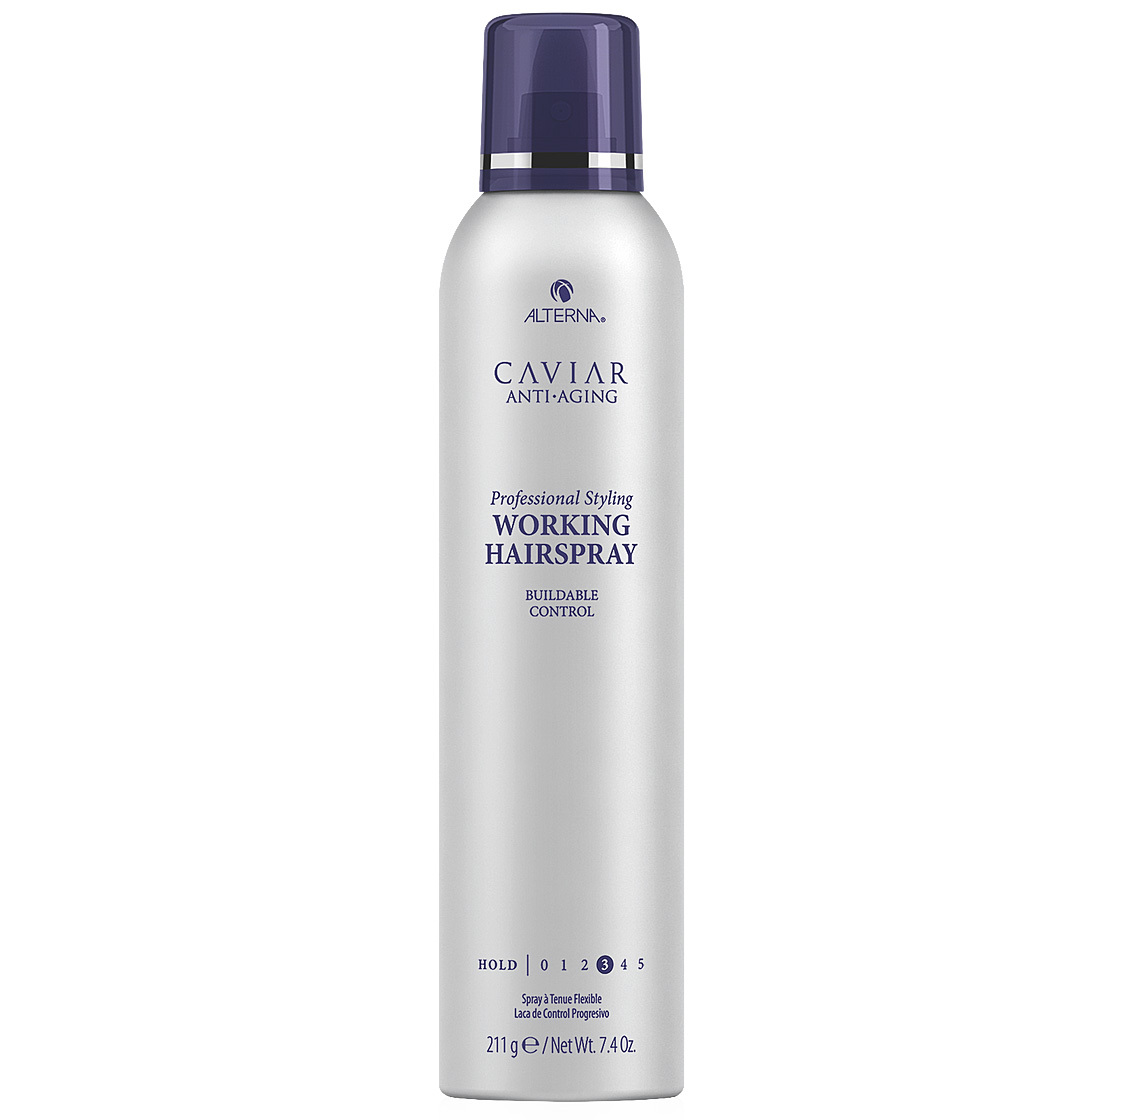 ALTERNA Caviar Anti-Aging Professional Styling Working Hair Spray